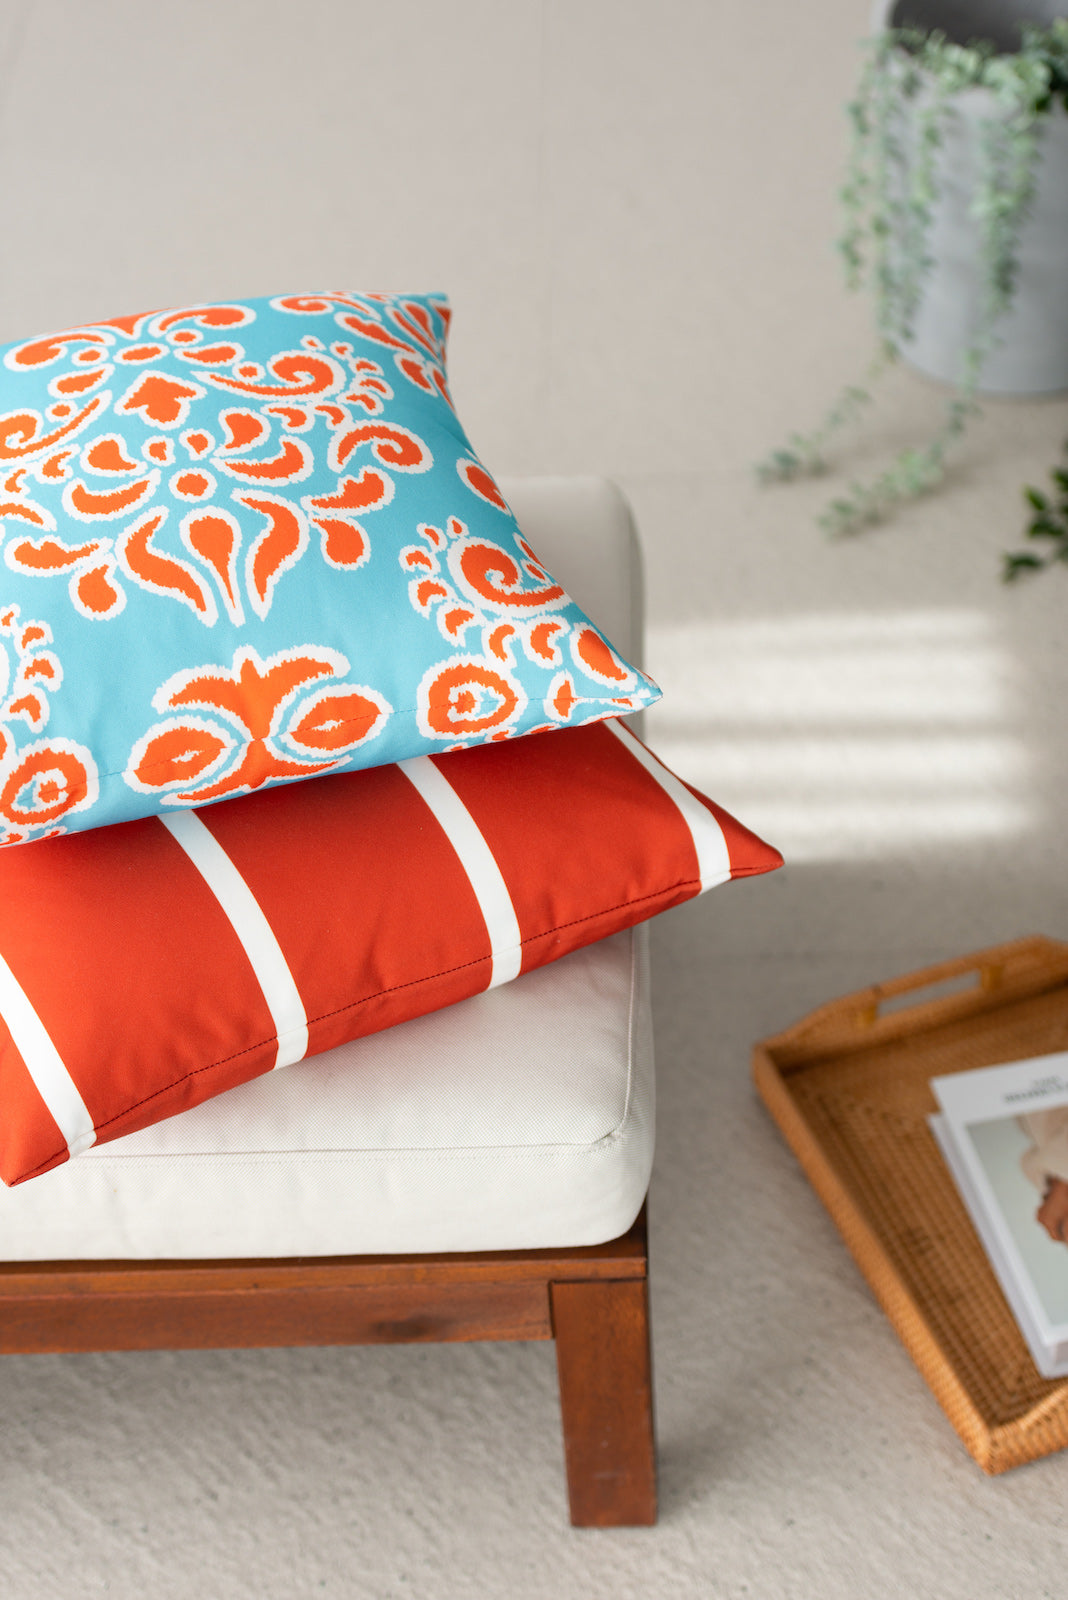 Coastal Outdoor Pillow Cover, Orange Aqua Damask, 18"x18"